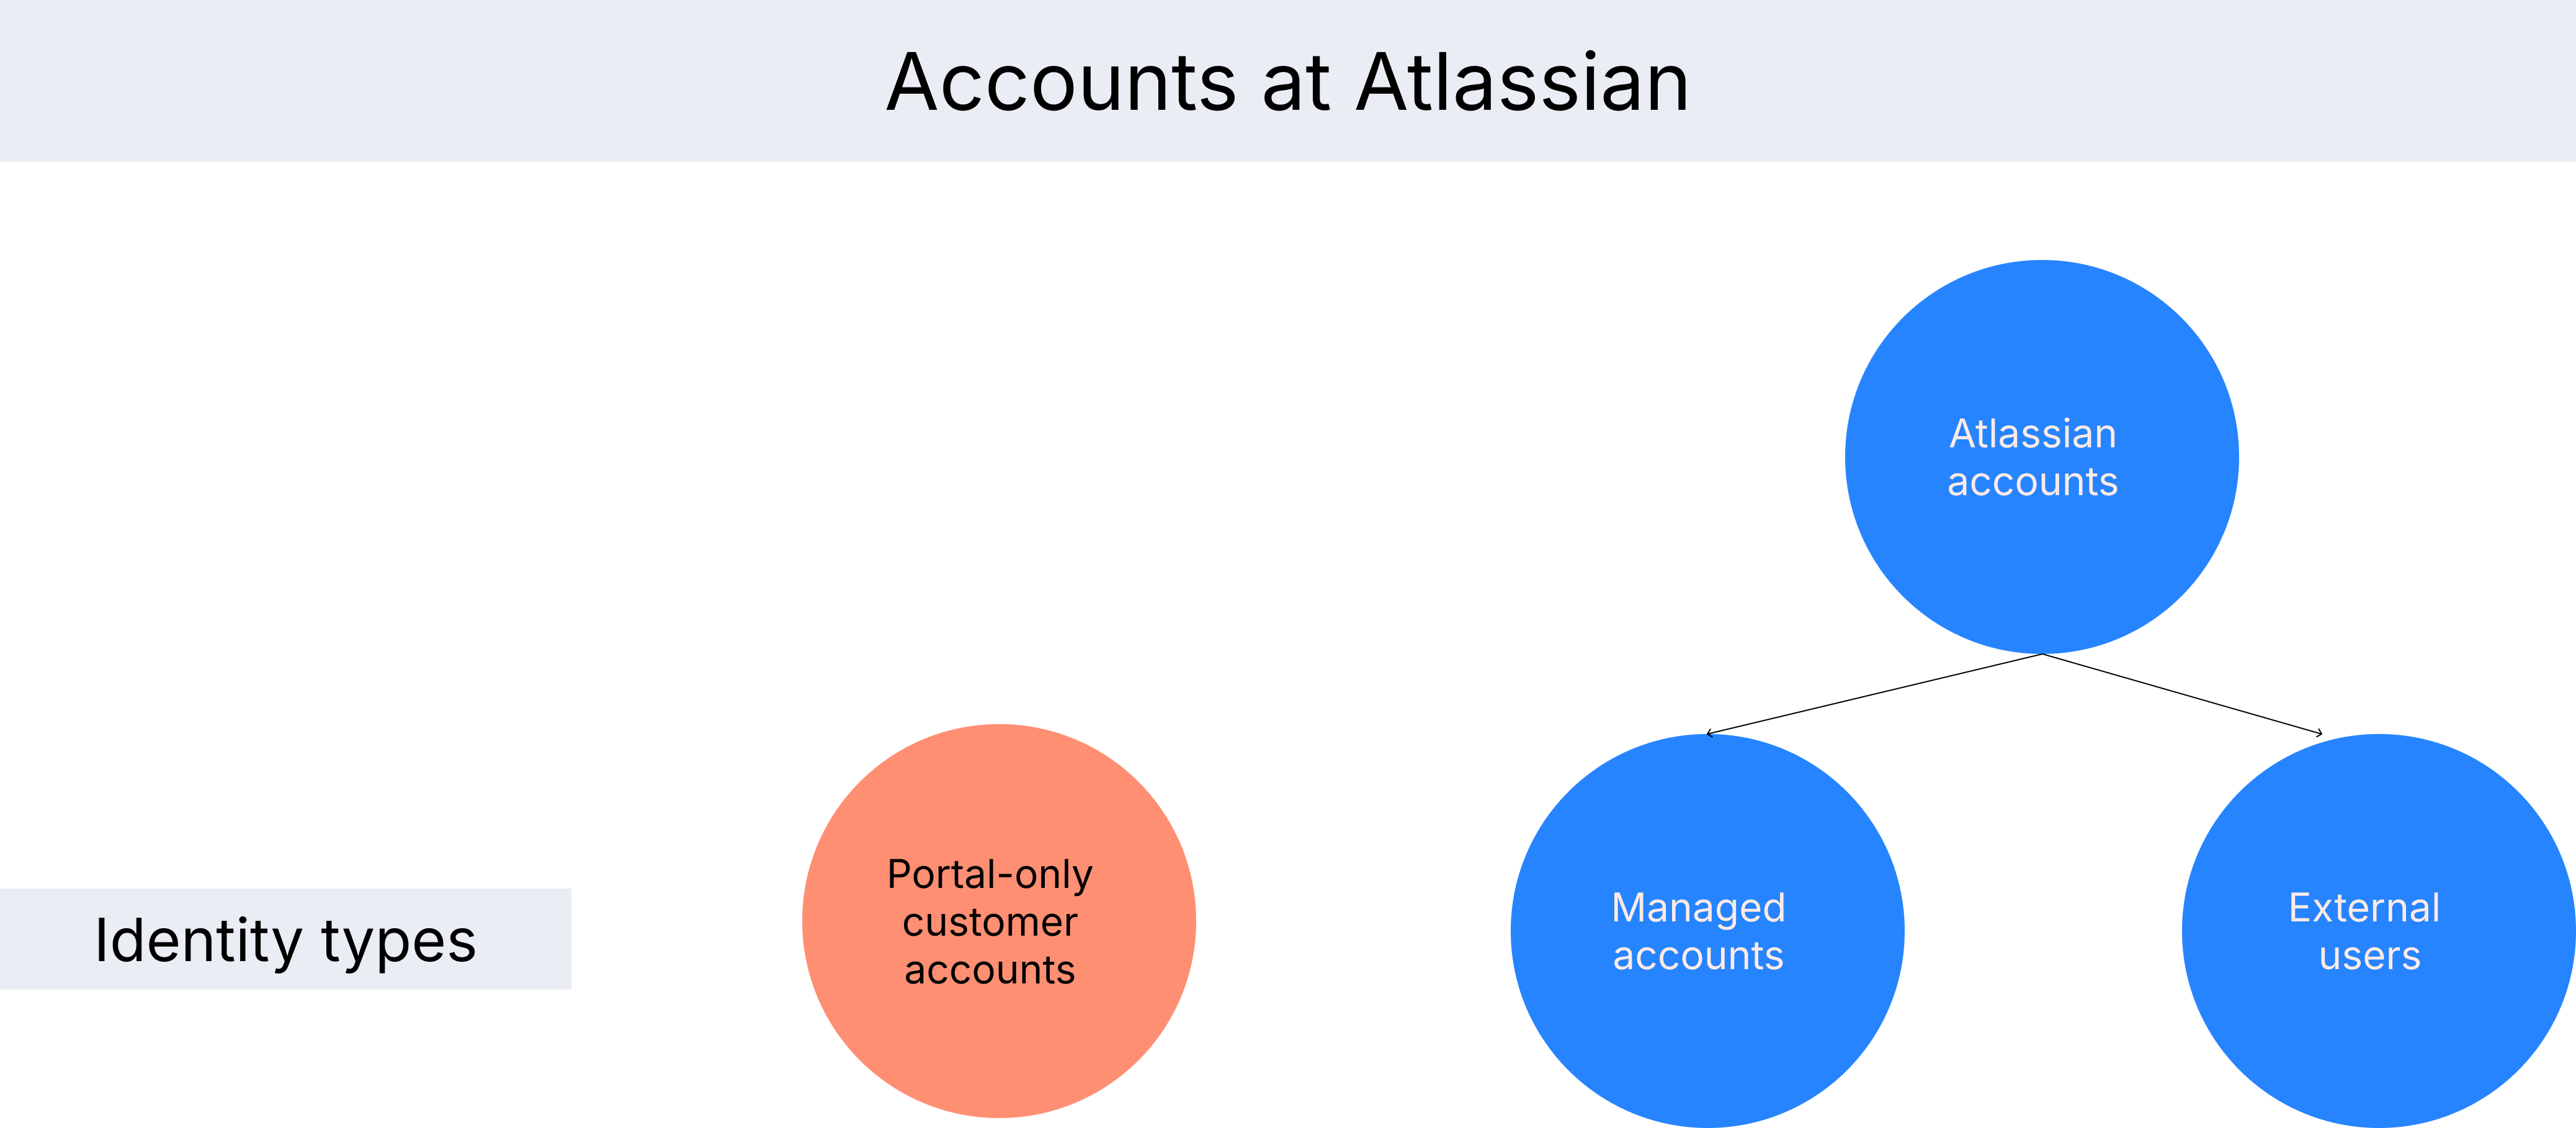 Types of identities at Atlassian